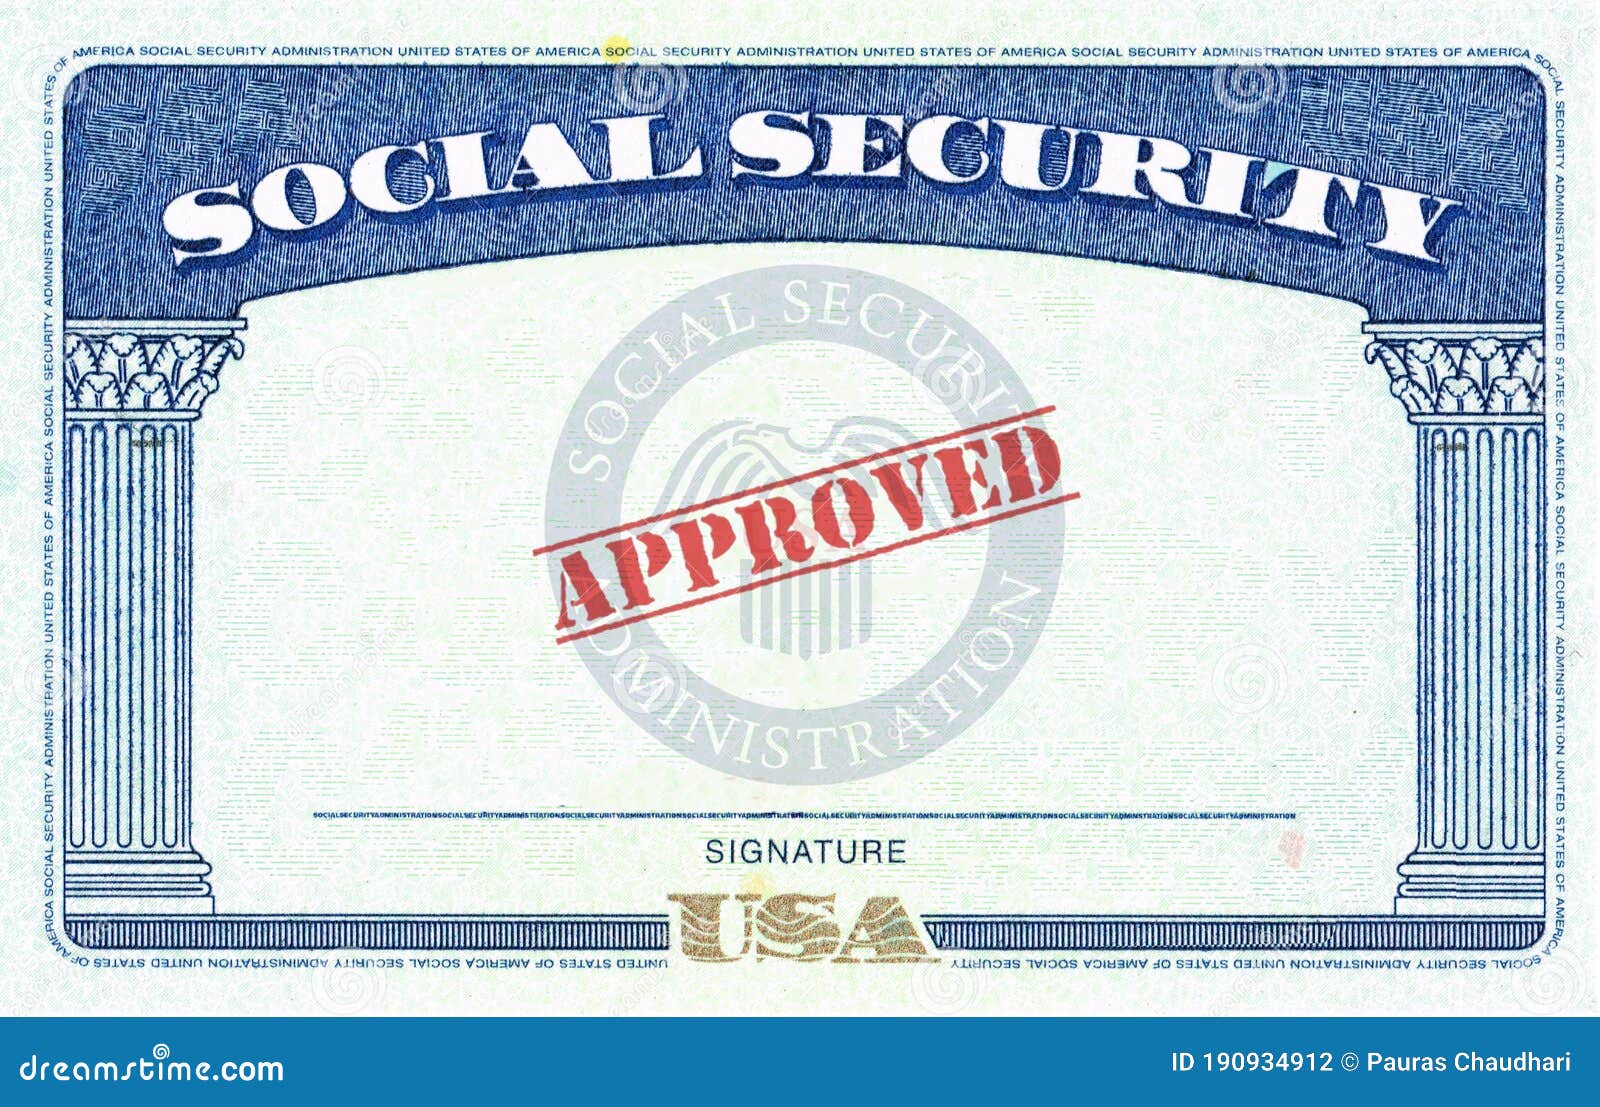 Social Security Card Template Photos - Free & Royalty-Free Stock For Social Security Card Template Pdf